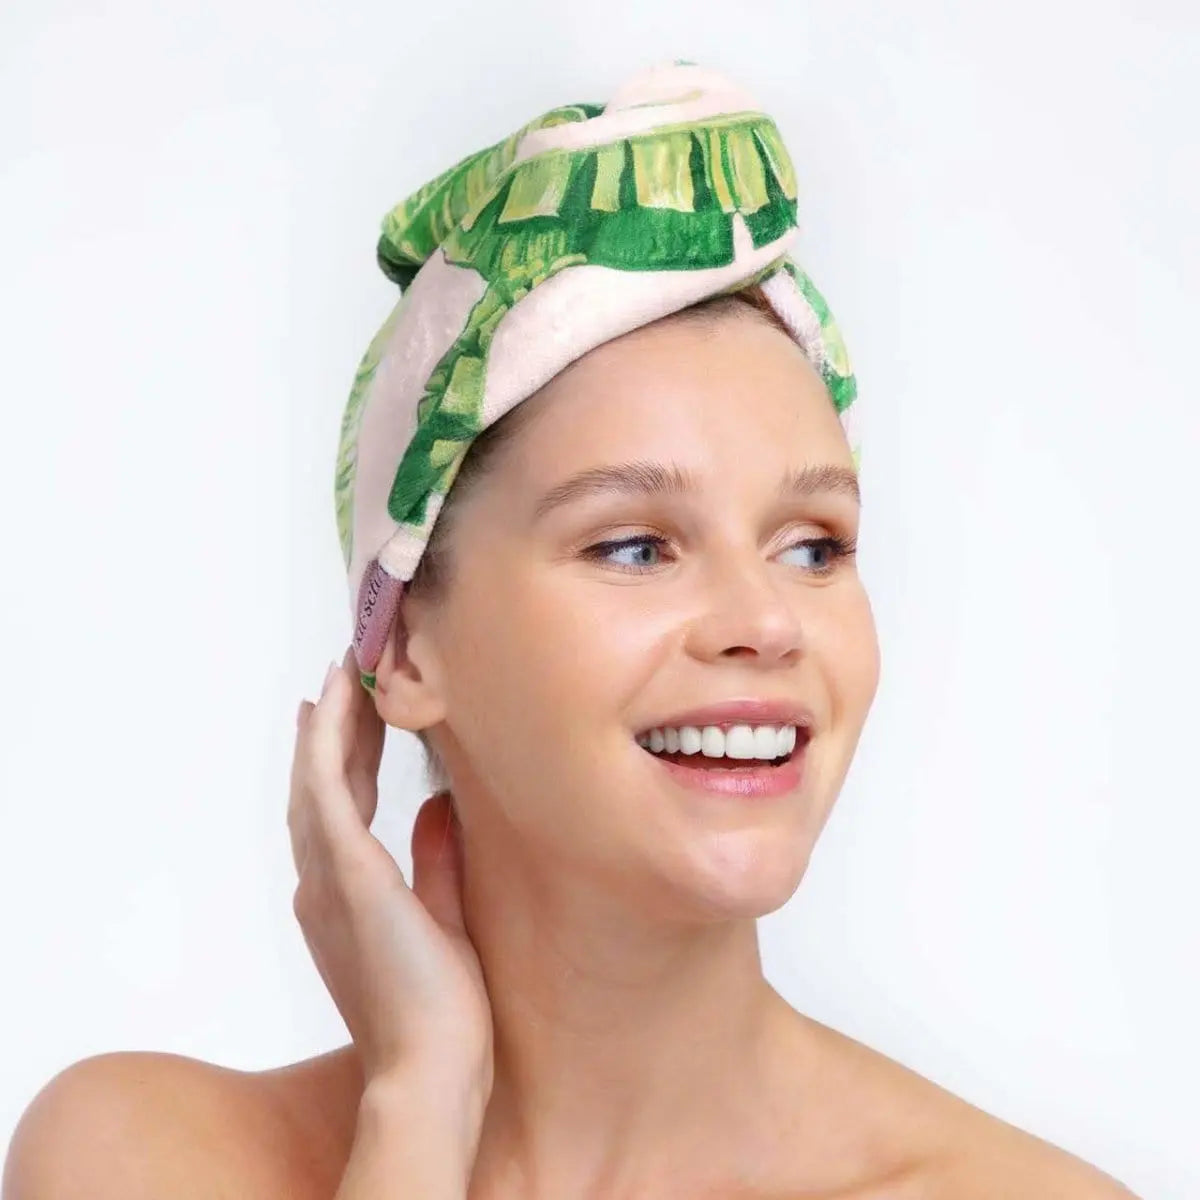 Kitsch Quick Drying Hair Towel - Toalla de Microfibra | Palm Tree